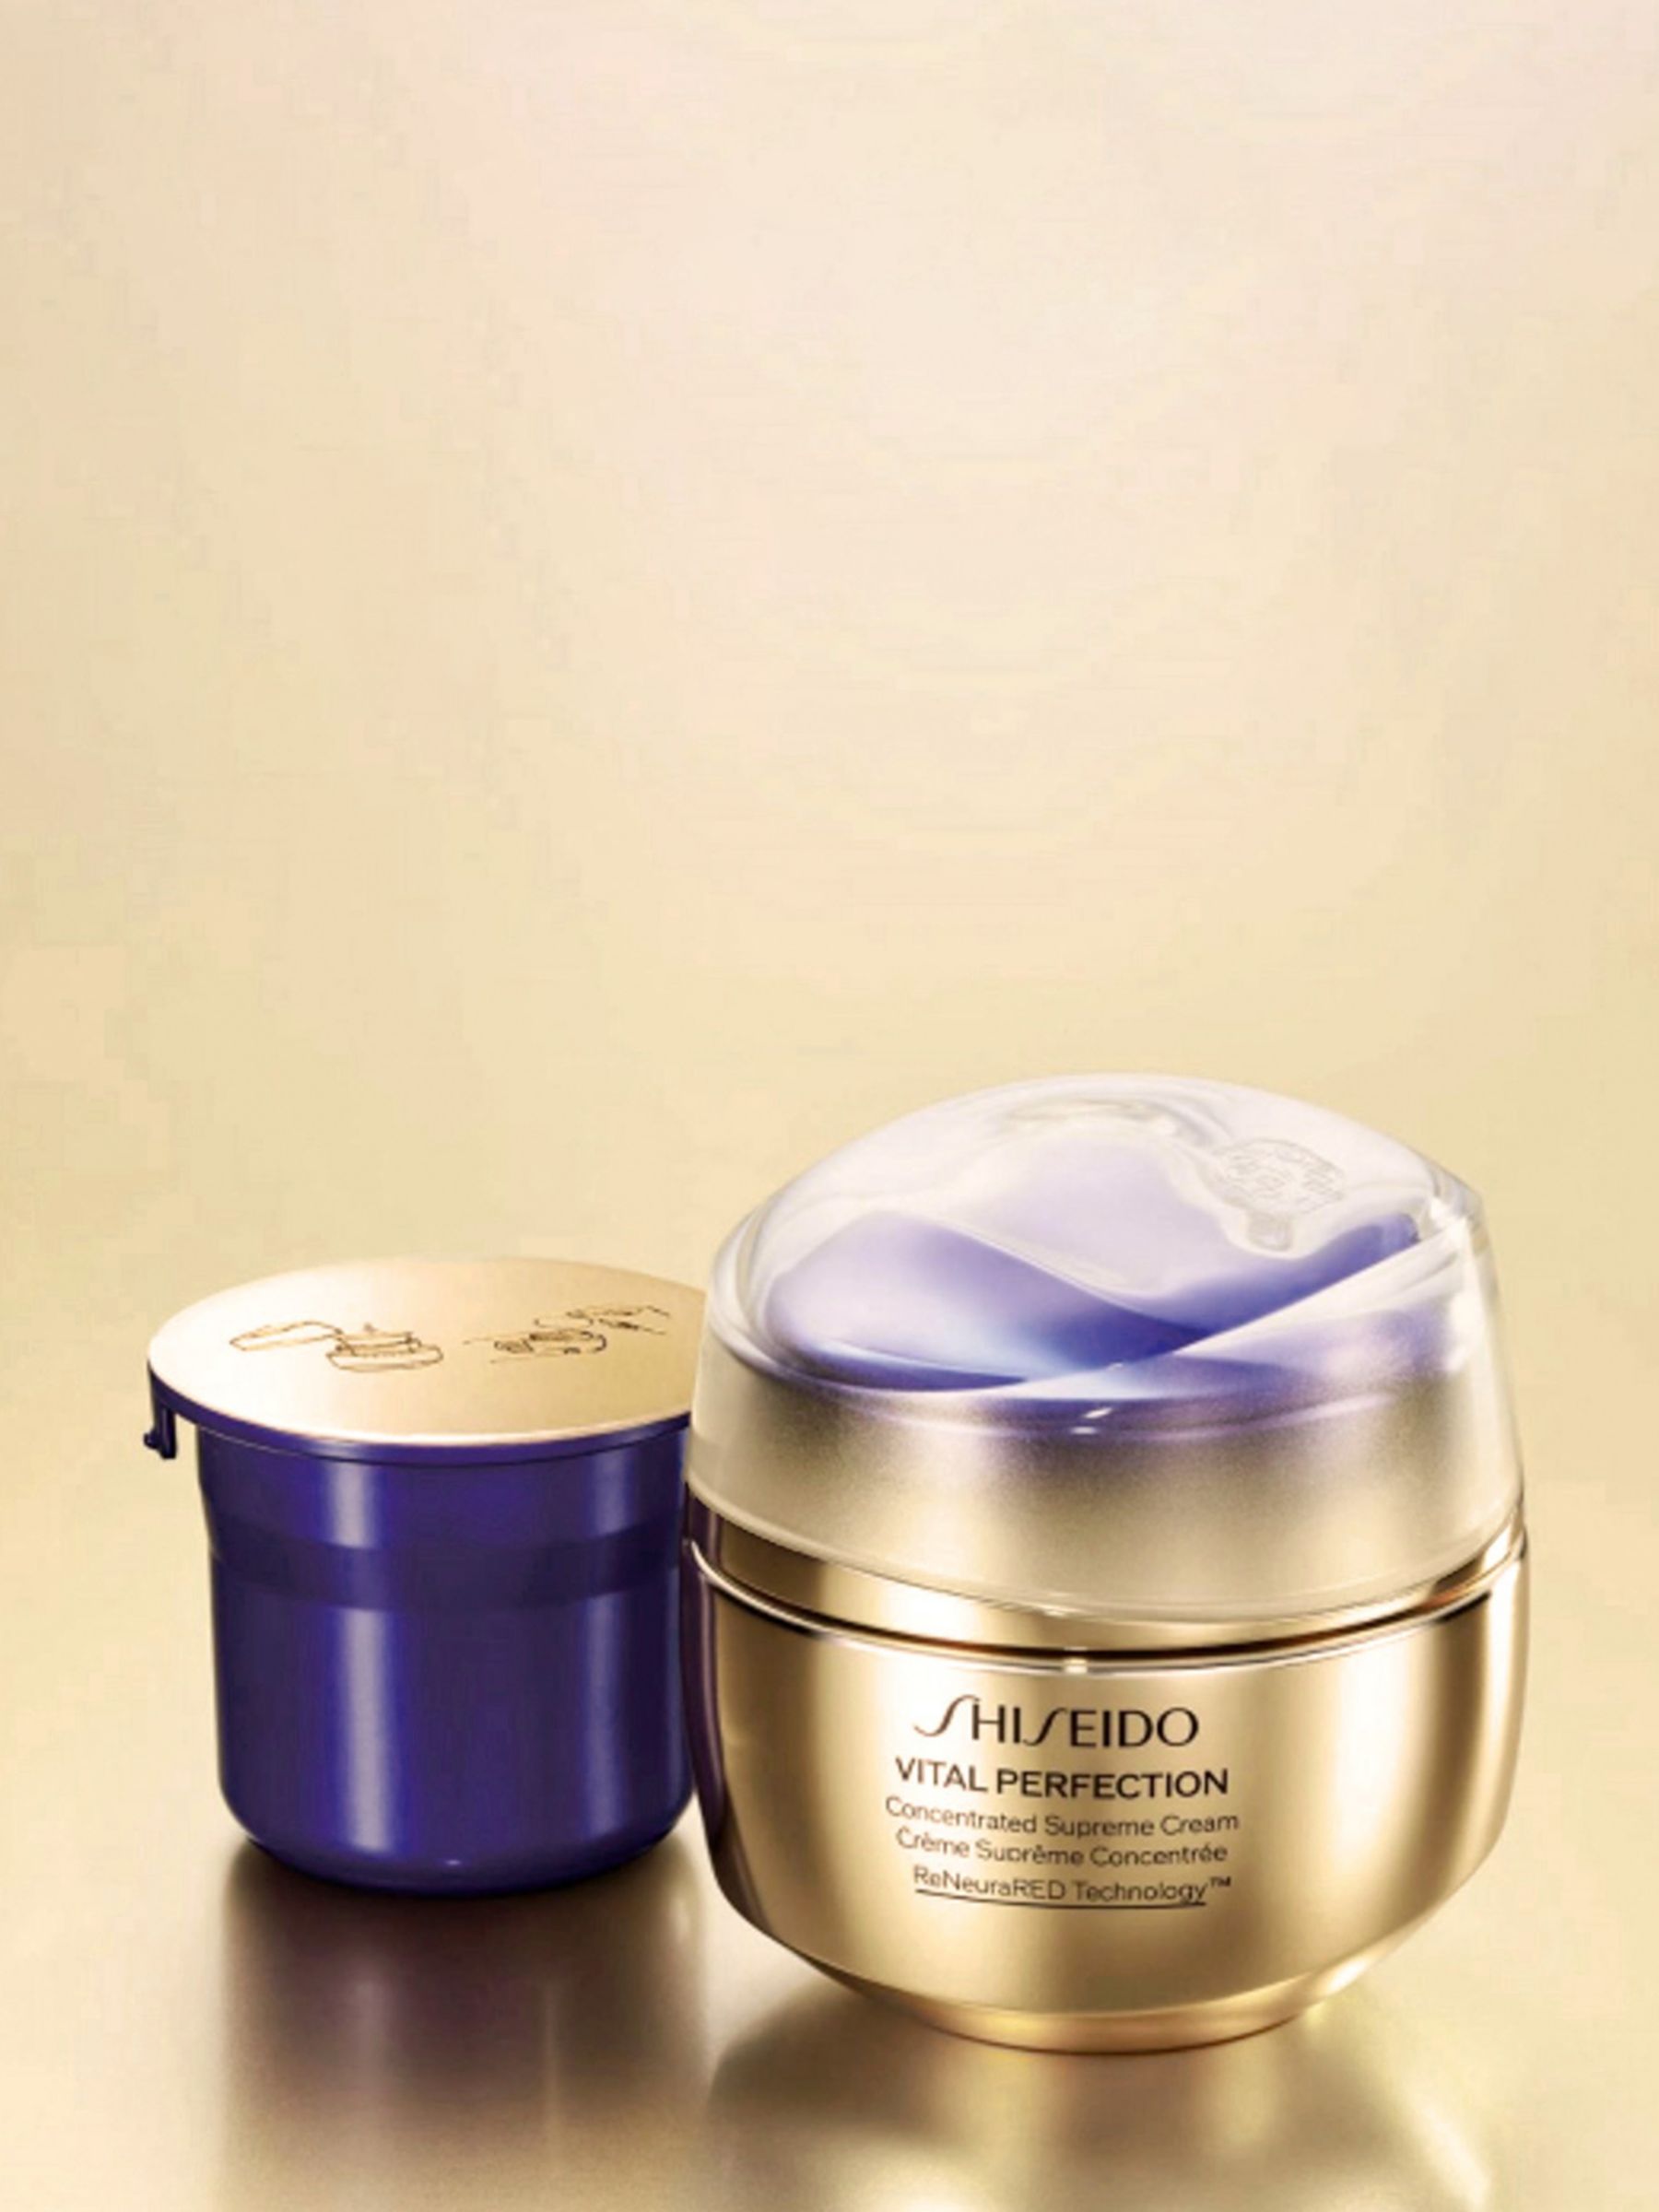 Shiseido Vital Perfection Concentrated Supreme Cream Duo Skincare Gift Set 5